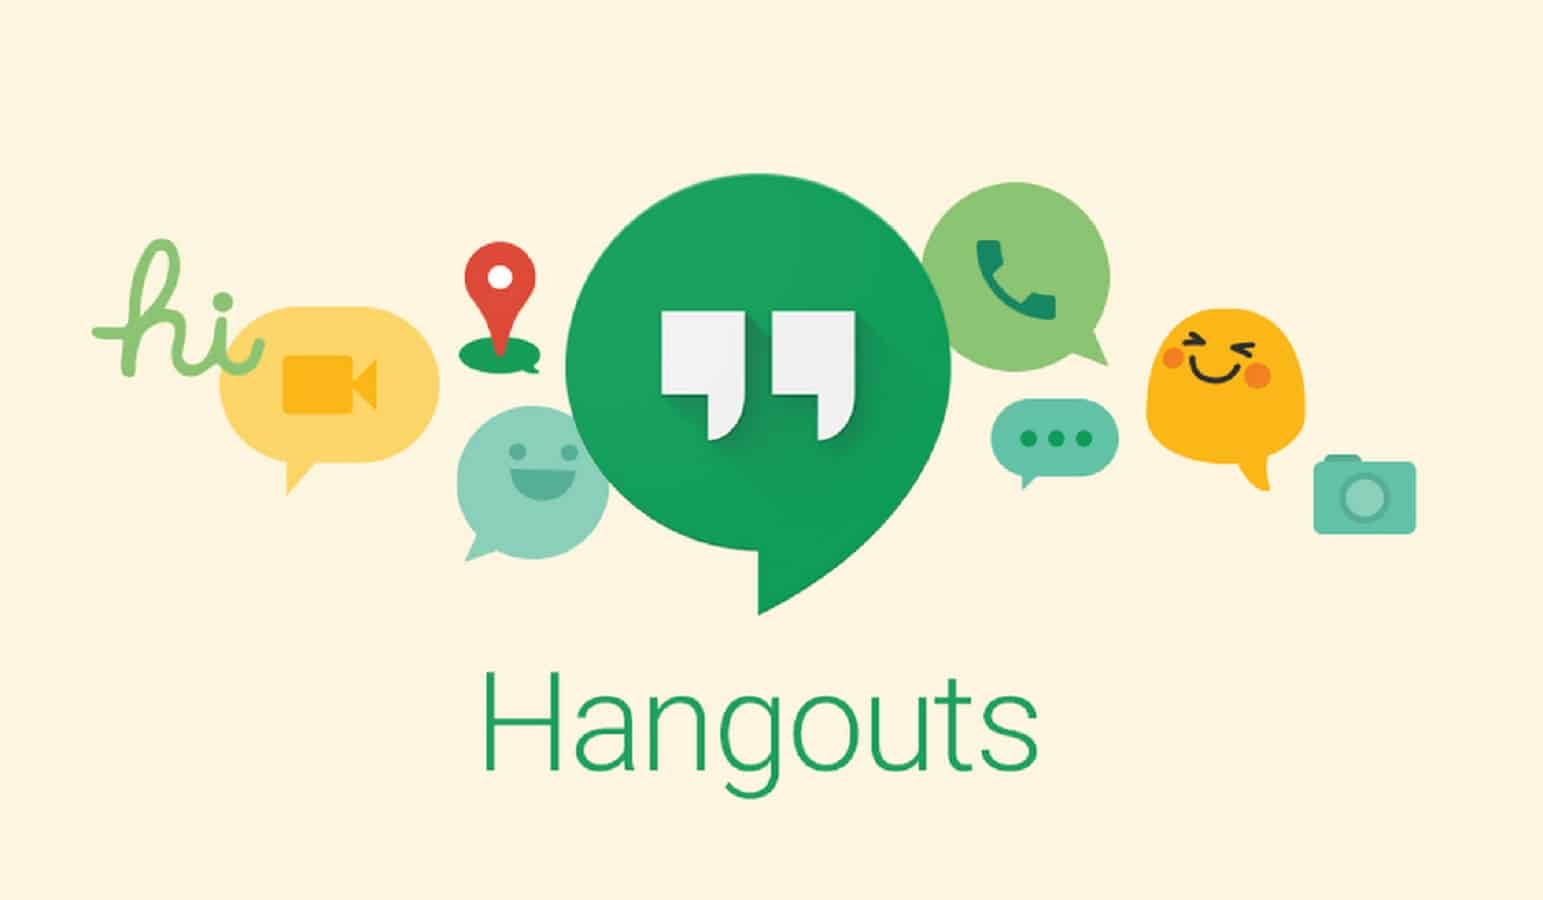 Google Hangouts - Giao tiếp mọi lúc, mọi nơi với thế giới xung quanh bạn